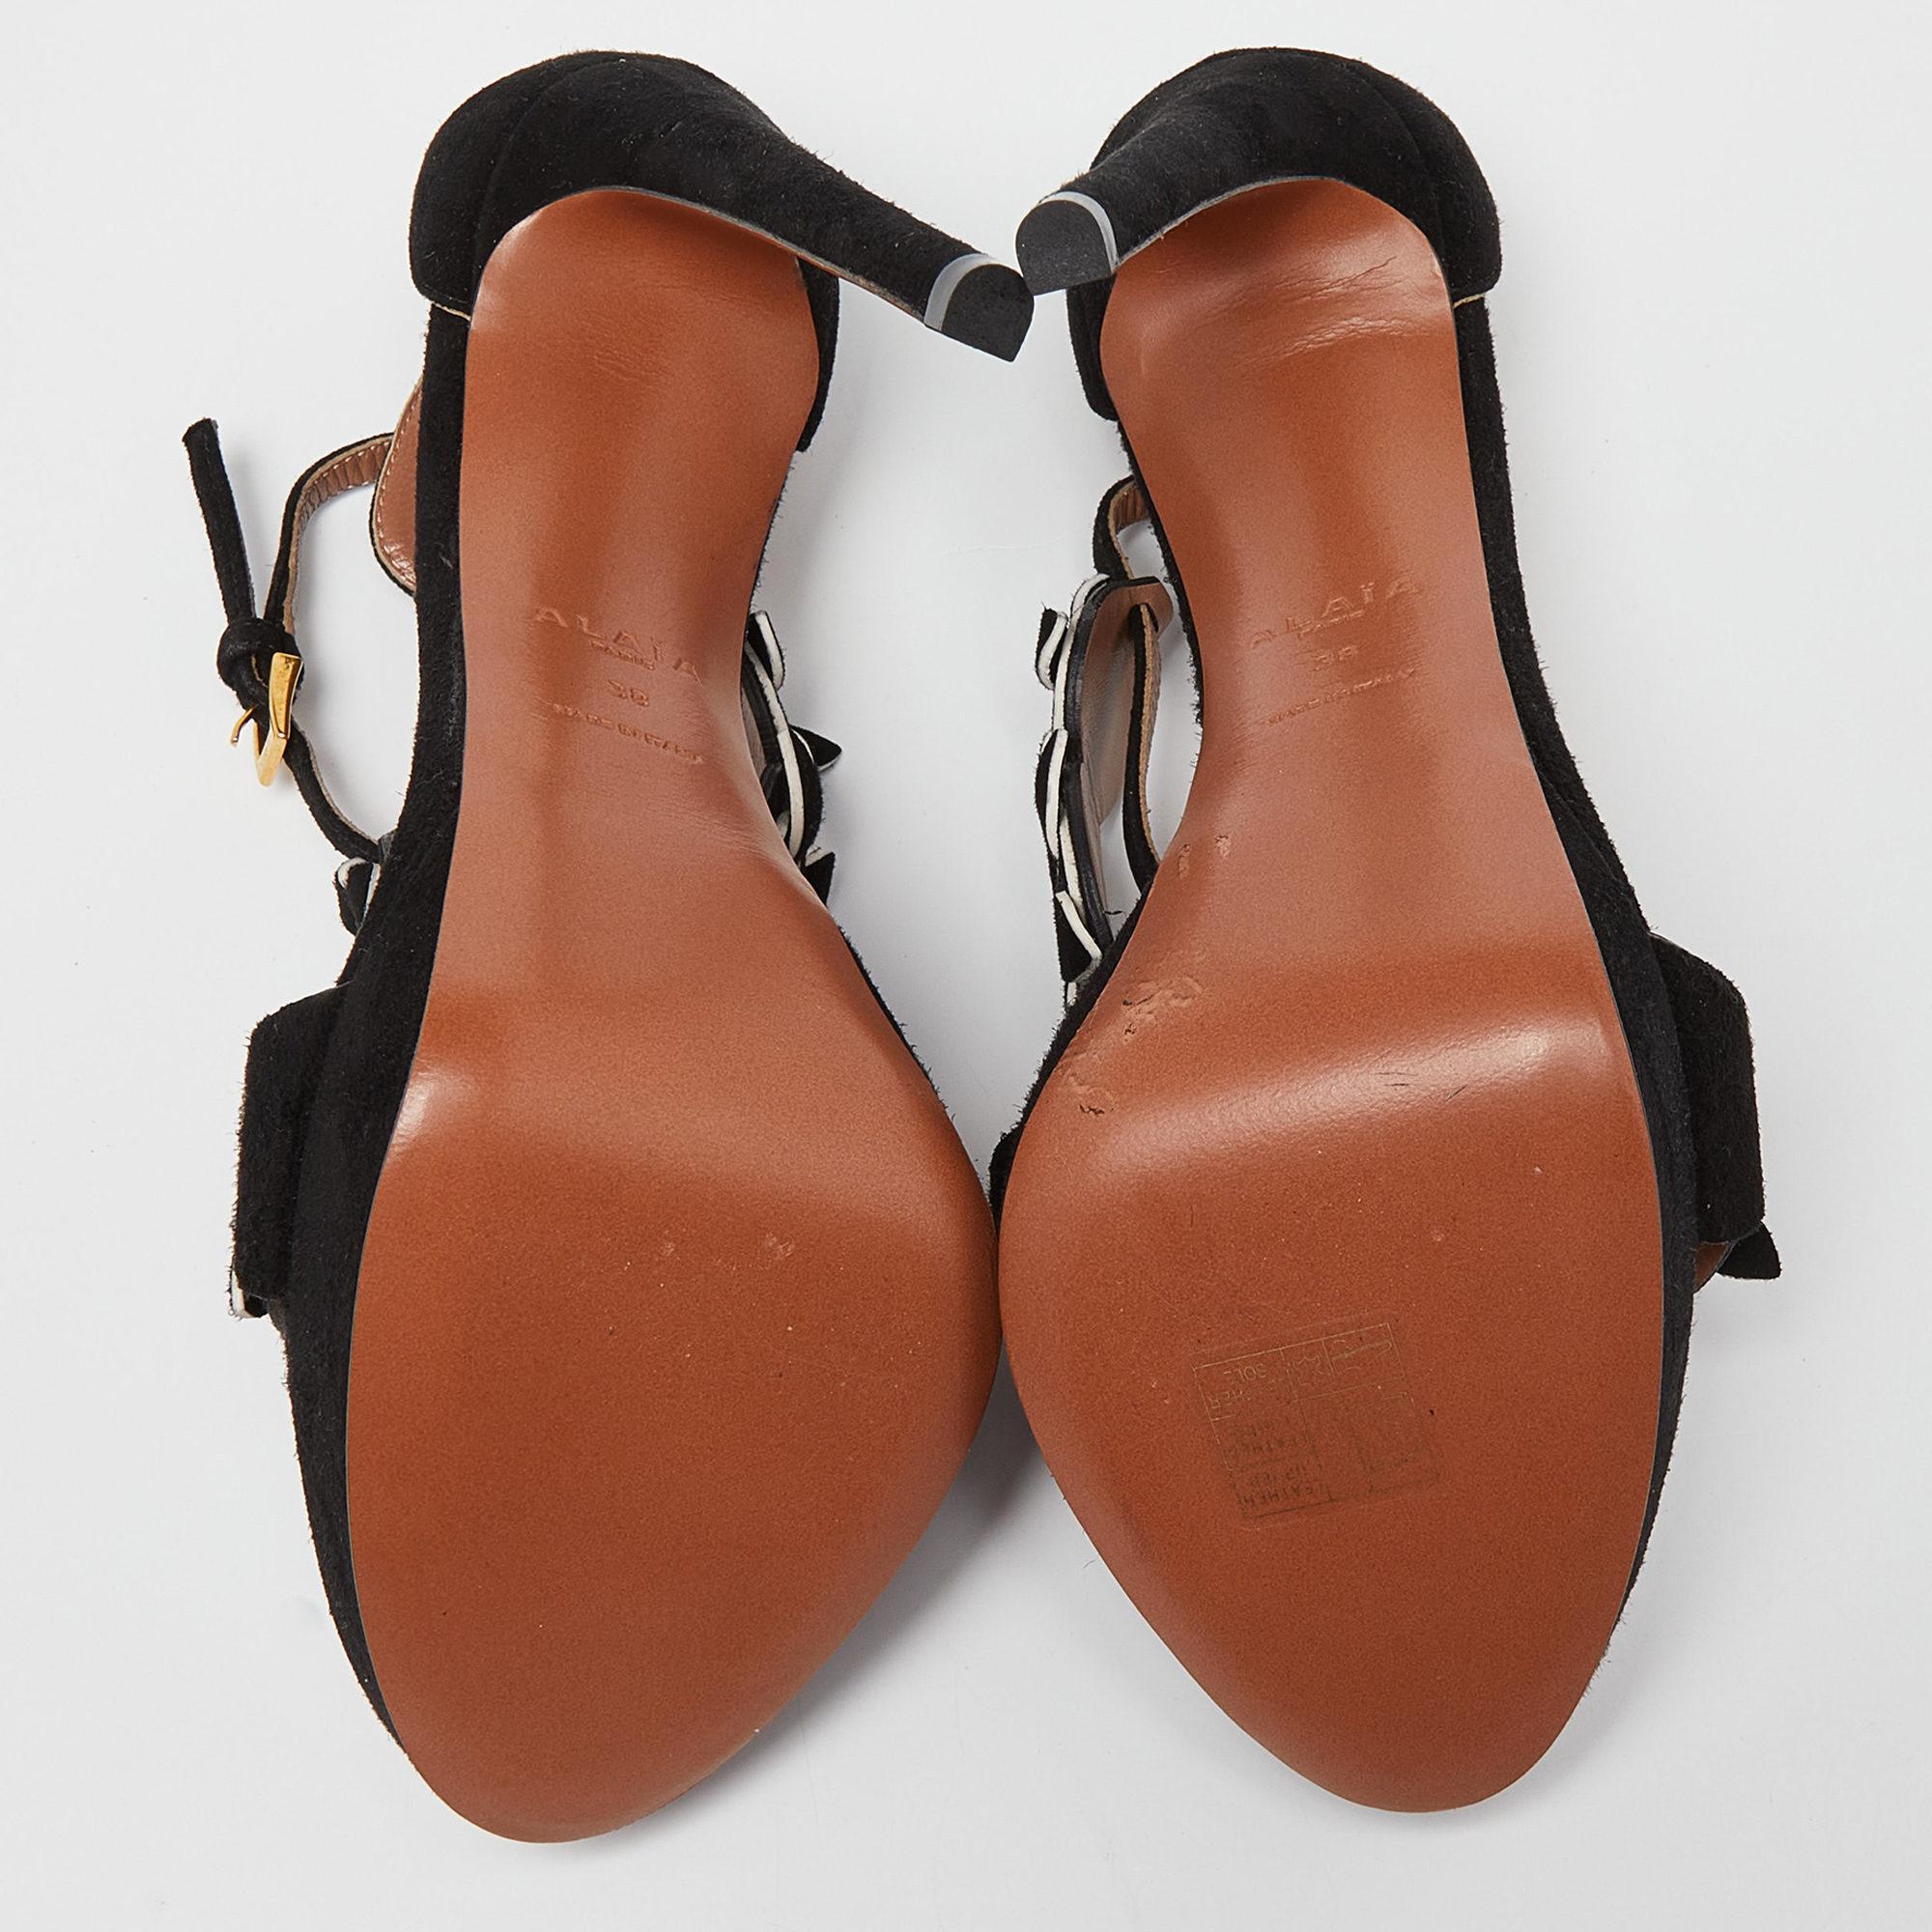 Alaia Black Suede Platform Ankle Strap Sandals Size 38